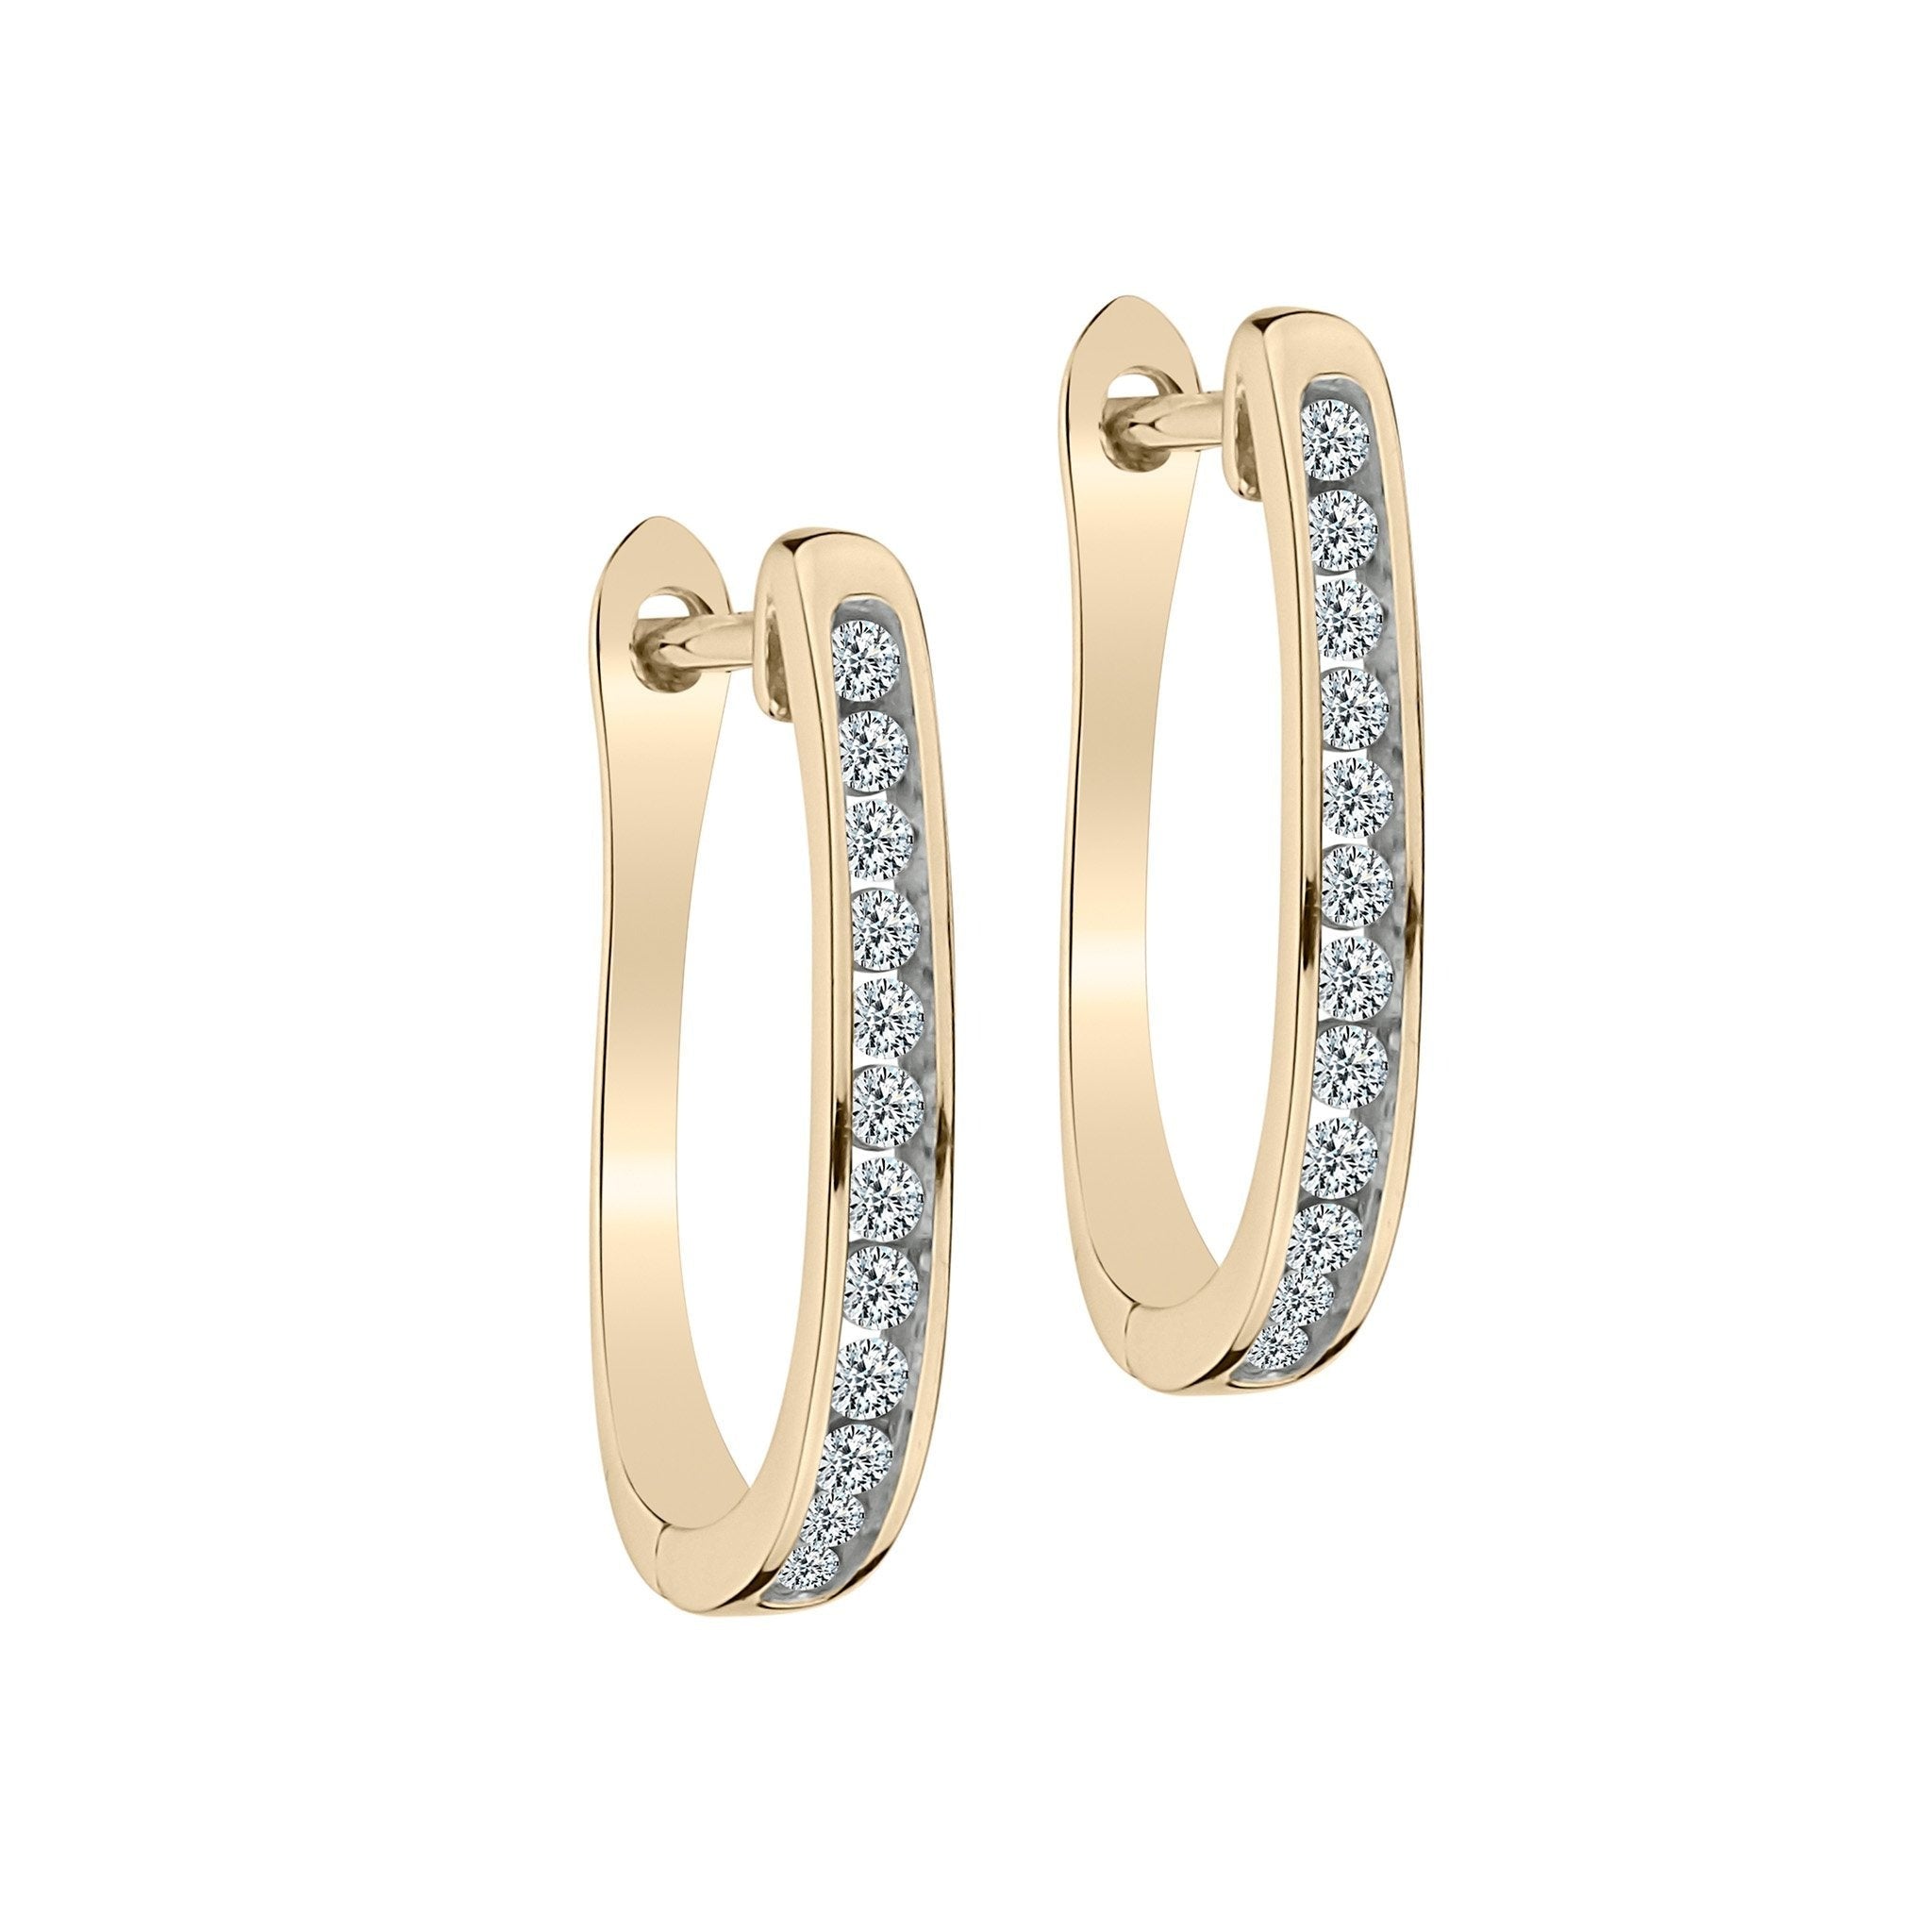 .25 CARAT DIAMOND HOOP EARRINGS, 10kt YELLOW GOLD. Hoops. Hoop Earrings. Griffin Jewellery Designs